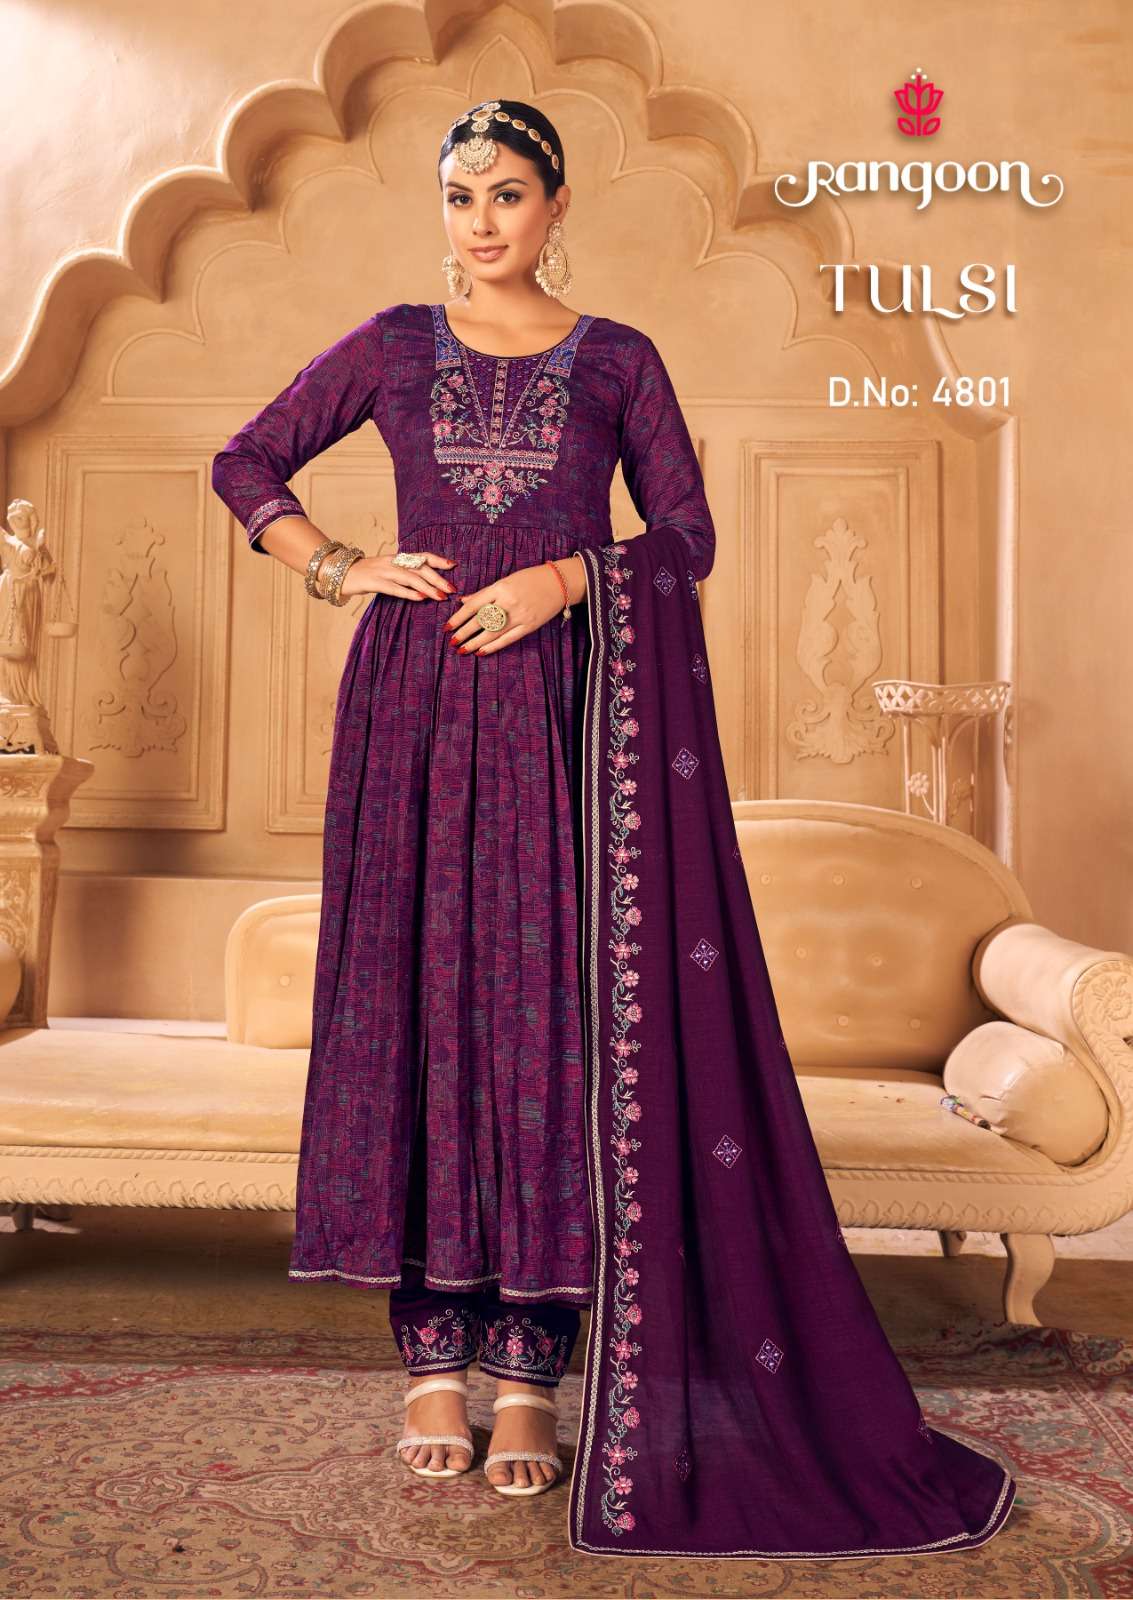 Rangoon Tulsi New Designs Festive Wear Anarkali Style Dress Catalog Suppliers